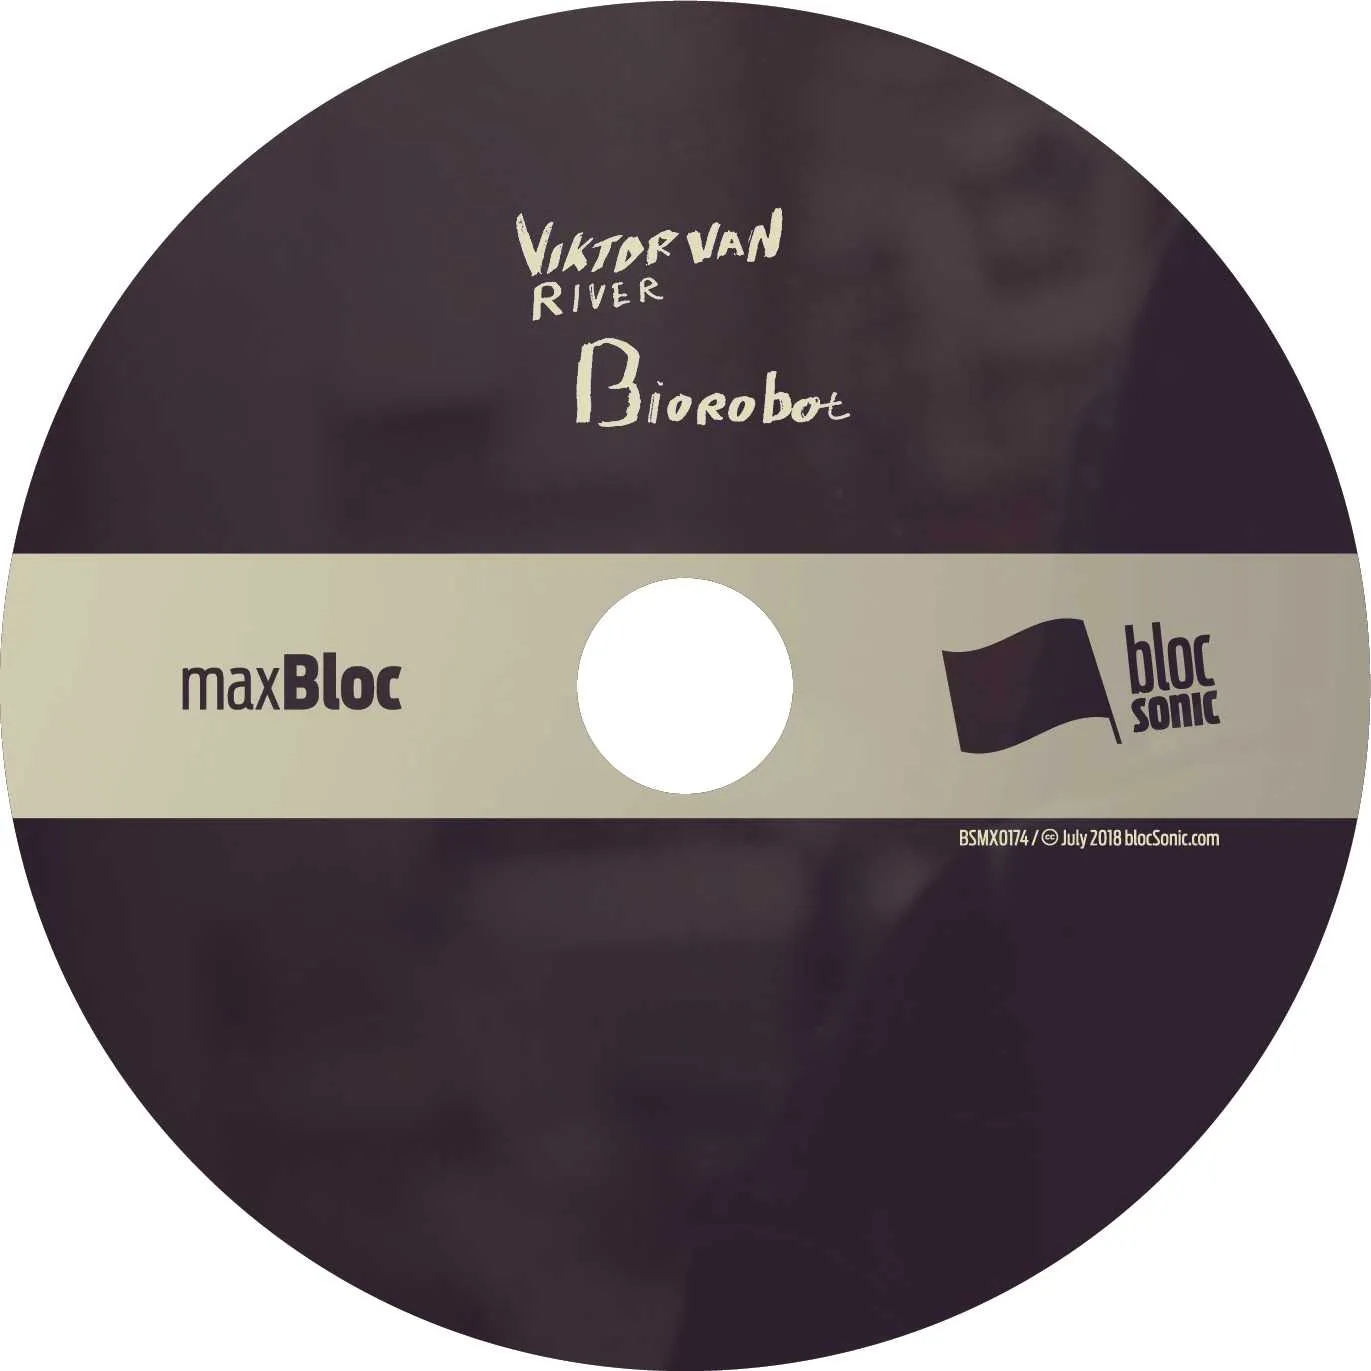 Album disc for “Biorobot” by Viktor Van River